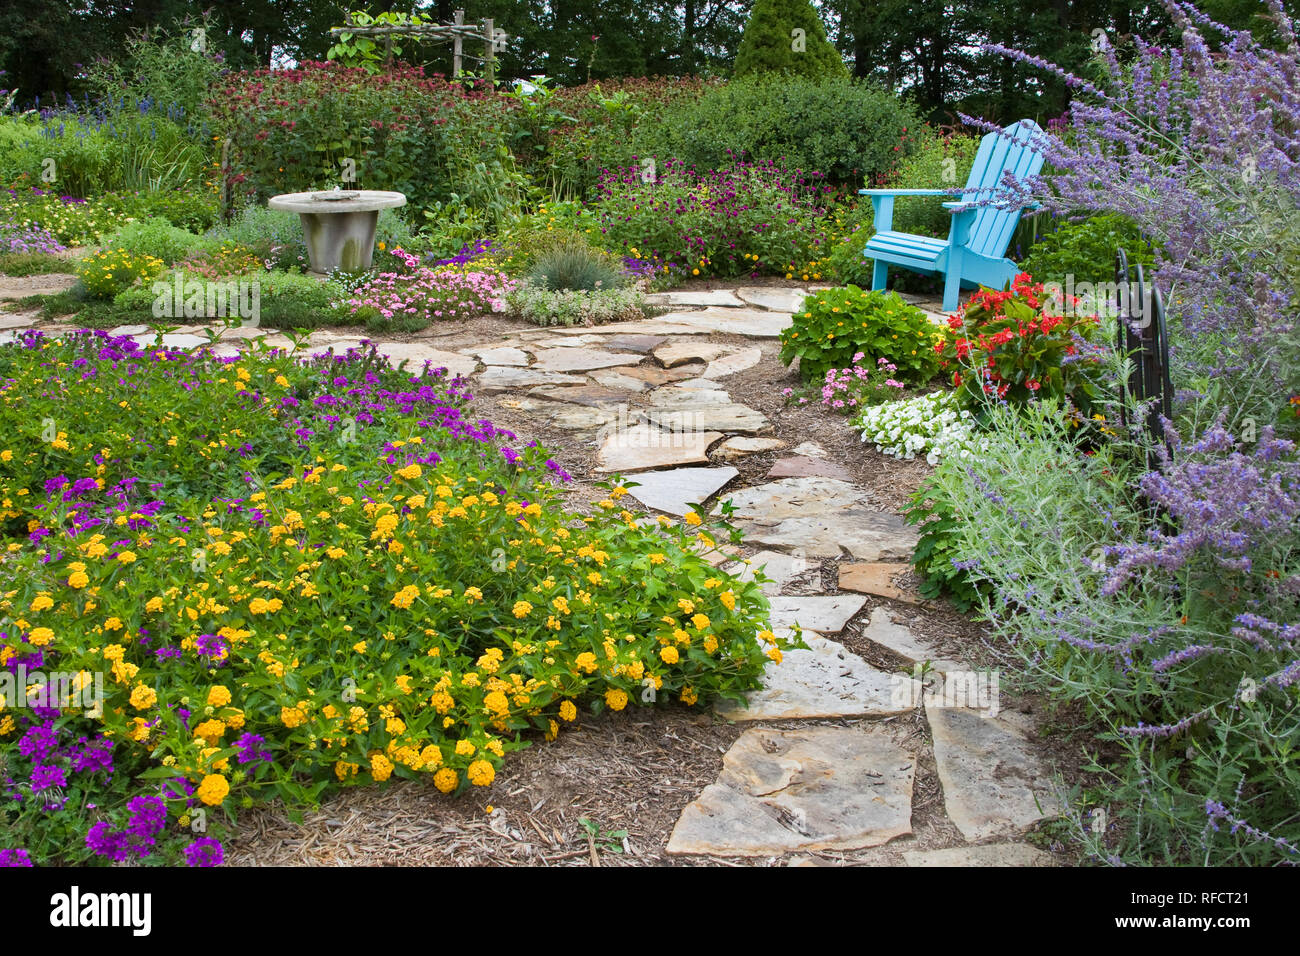 63821-19406 Flower garden with stone path, blue chair, birdbath. Homestead Purple Verbena, yellow lantana, Russian Sage, Gomphrena IL Stock Photo